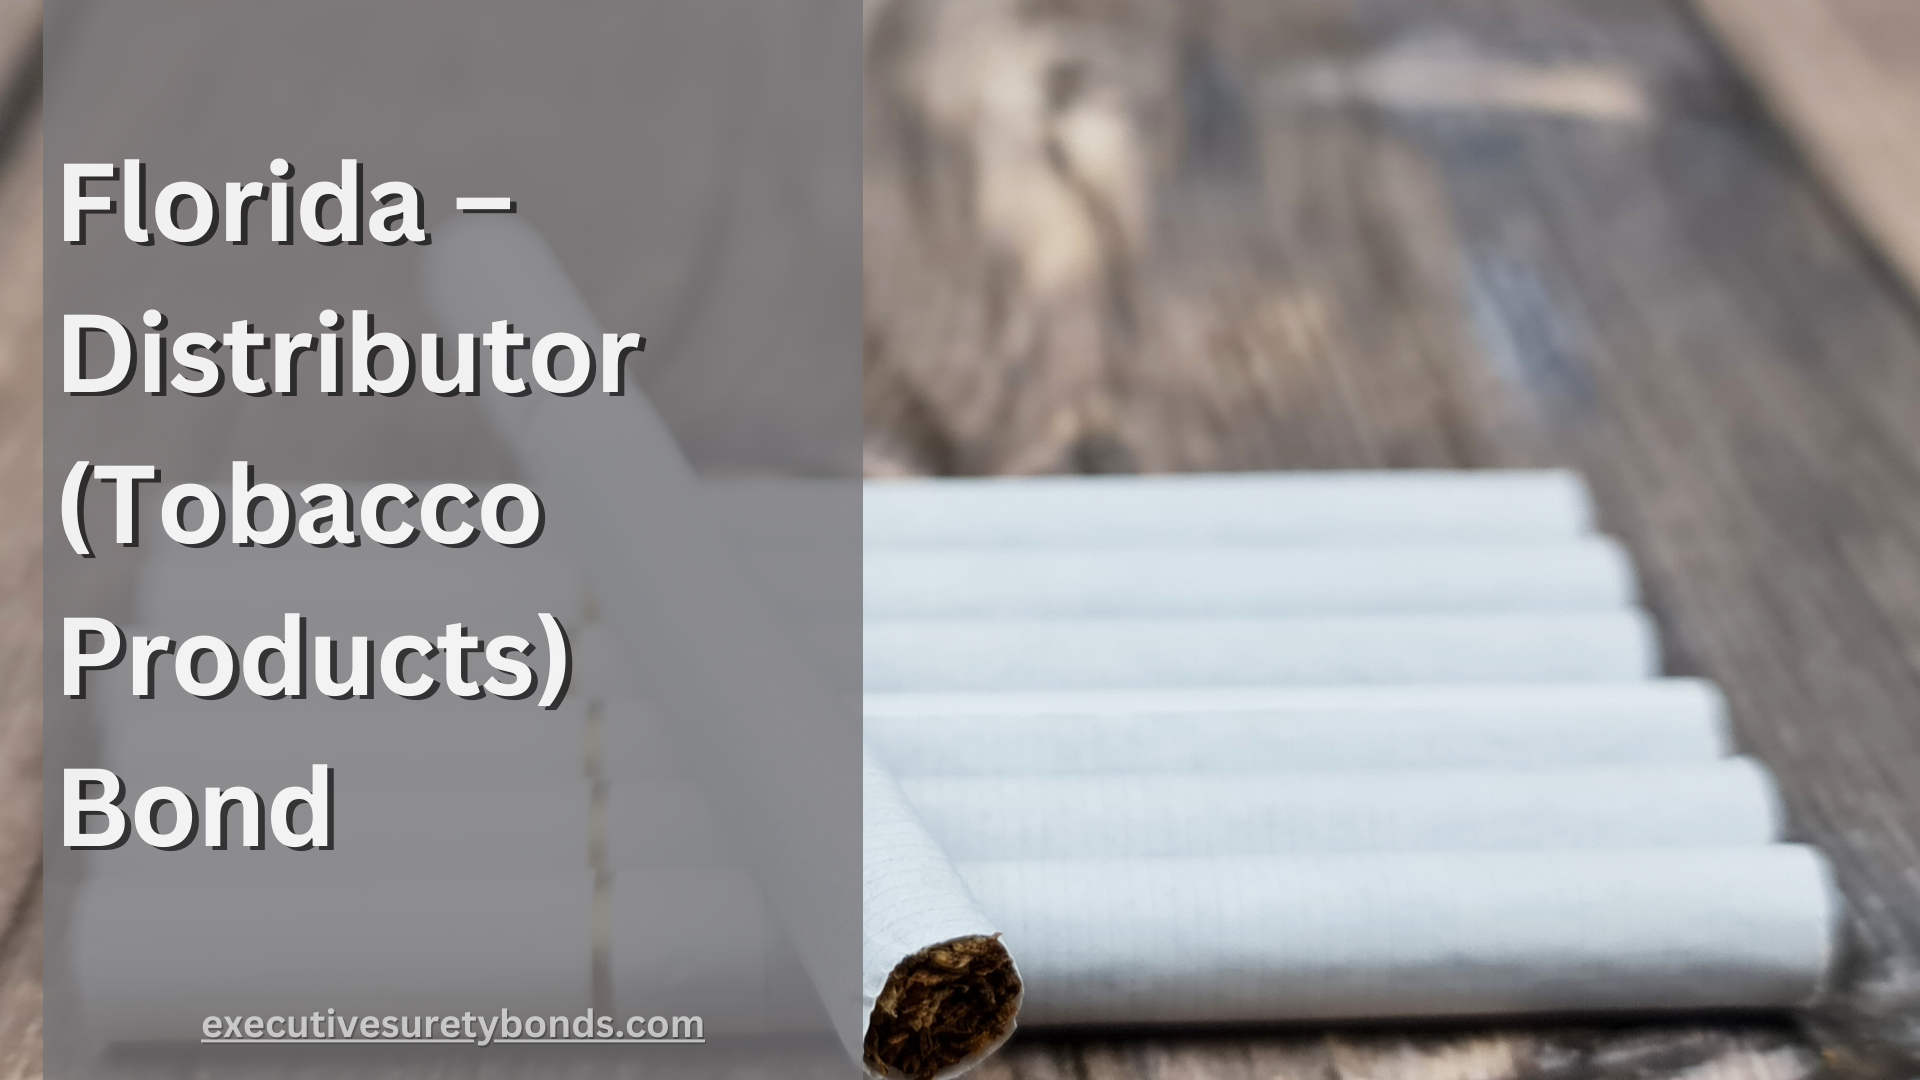 Florida – Distributor (Tobacco Products) Bond